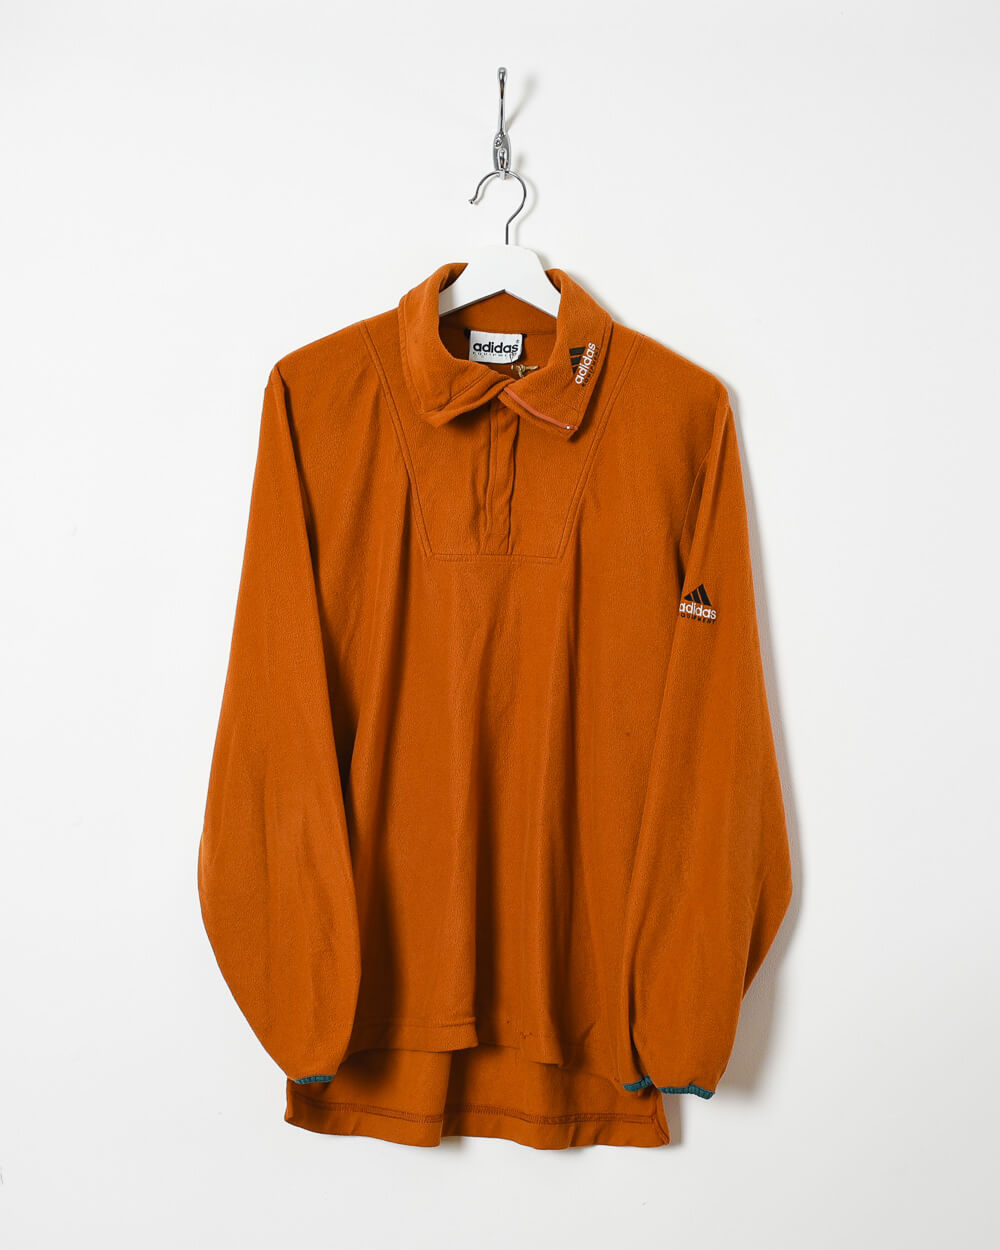 Orange Adidas Equipment 1/4 Zip Fleece - Medium